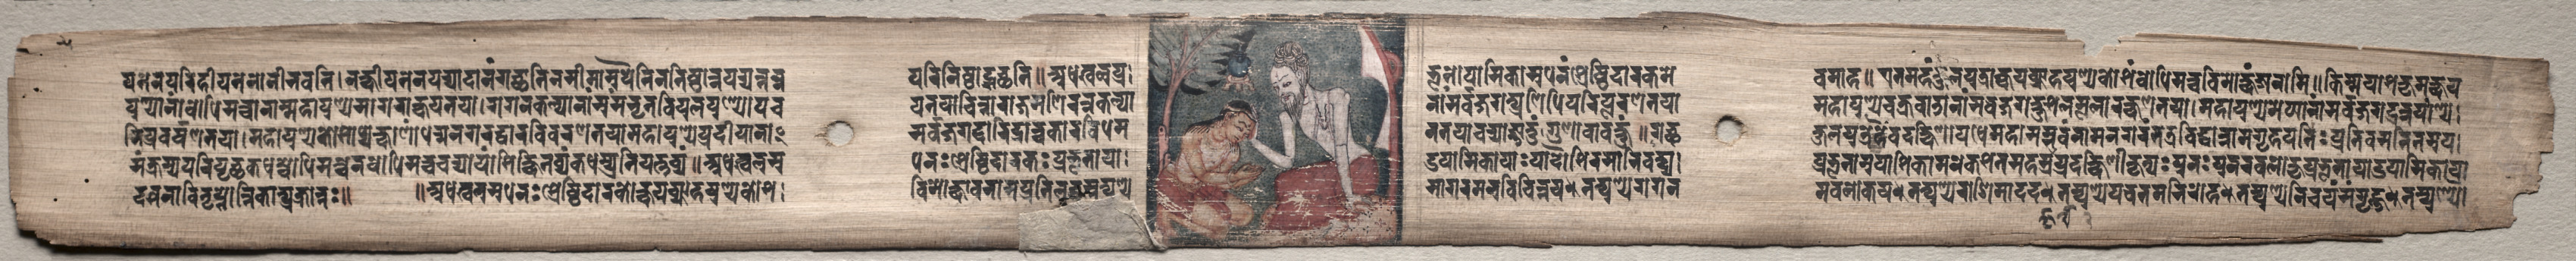 Sudhana and the rishi Bhishmottaranirgosha, folio 94 (recto) from a Gandavyuha-sutra (Scripture of the Supreme Array)